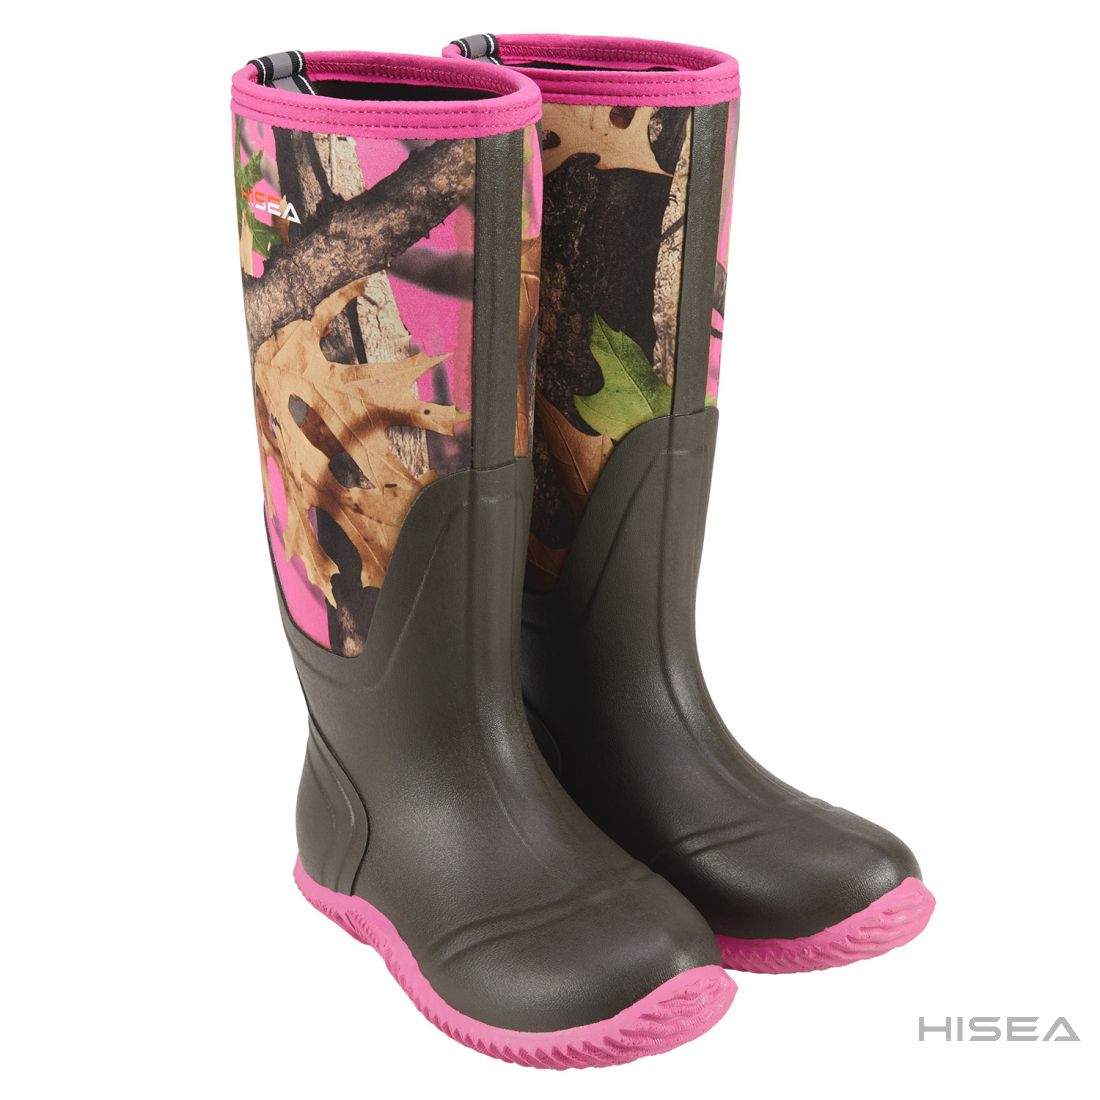 AquaX Women's Rubber Rain Boots